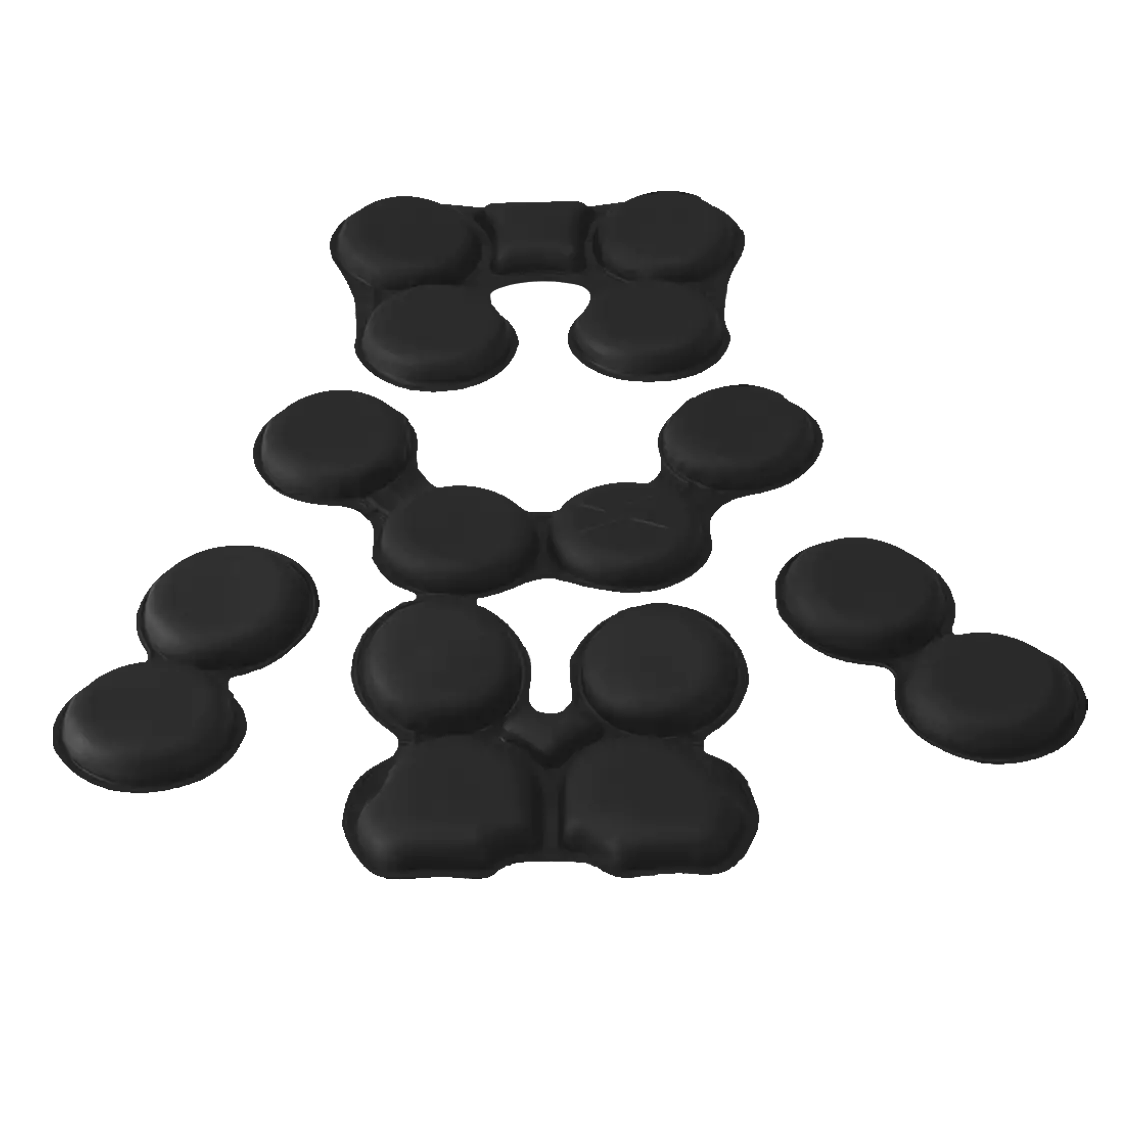 Black X2E + / X2E comfort pads for football helmets.